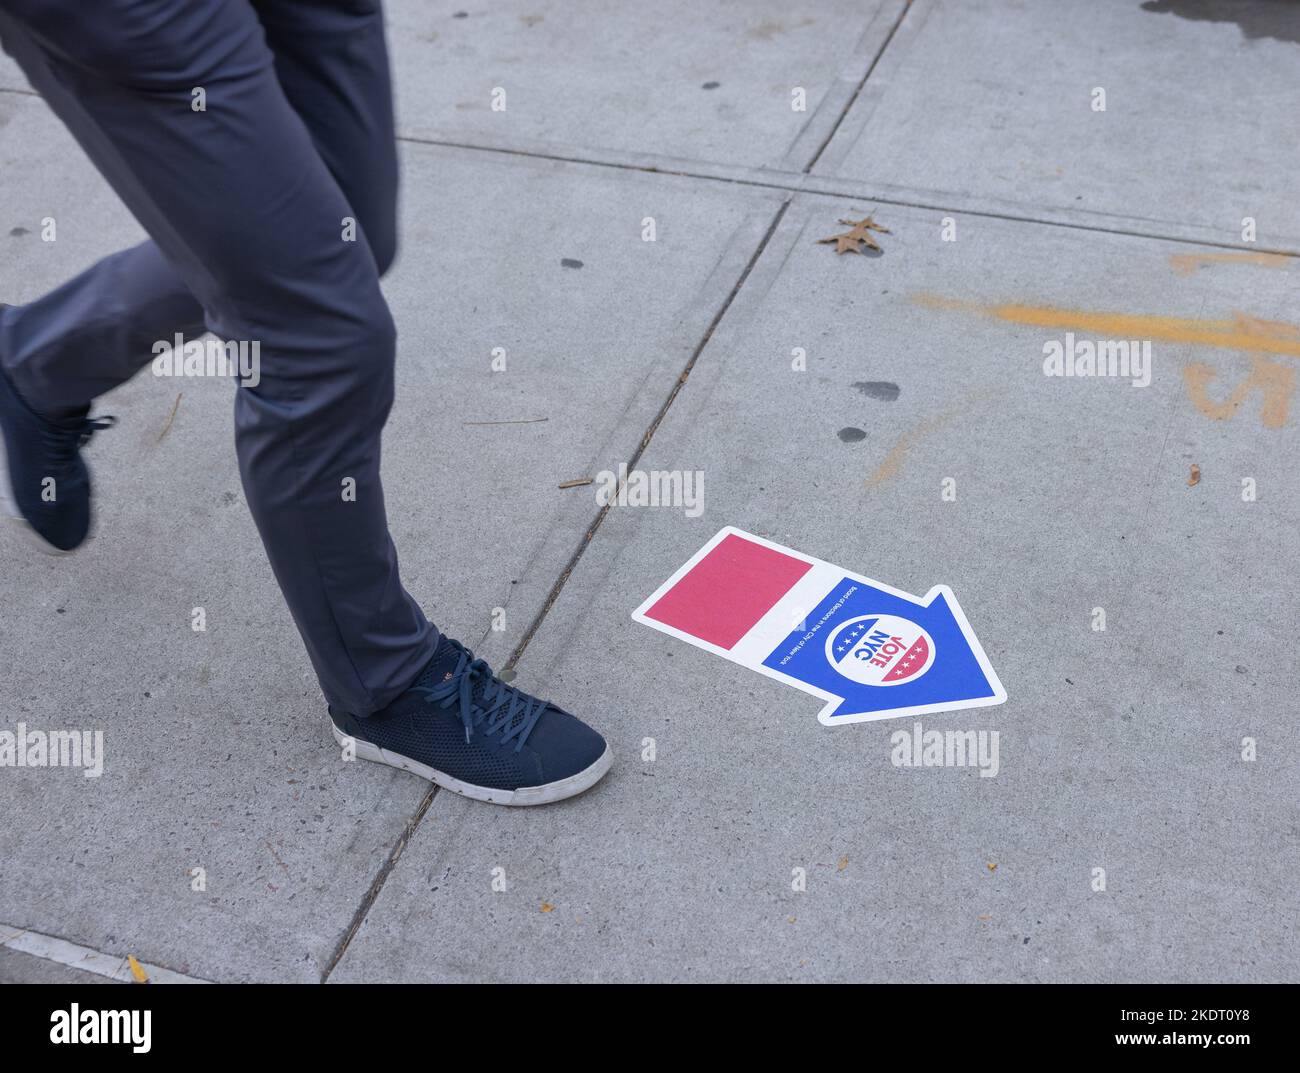 NEW YORK, N.Y. — November 8, 2022: A pedestrian walks near a polling site in Manhattan’s TriBeCa neighborhood on Election Day 2022. Stock Photo